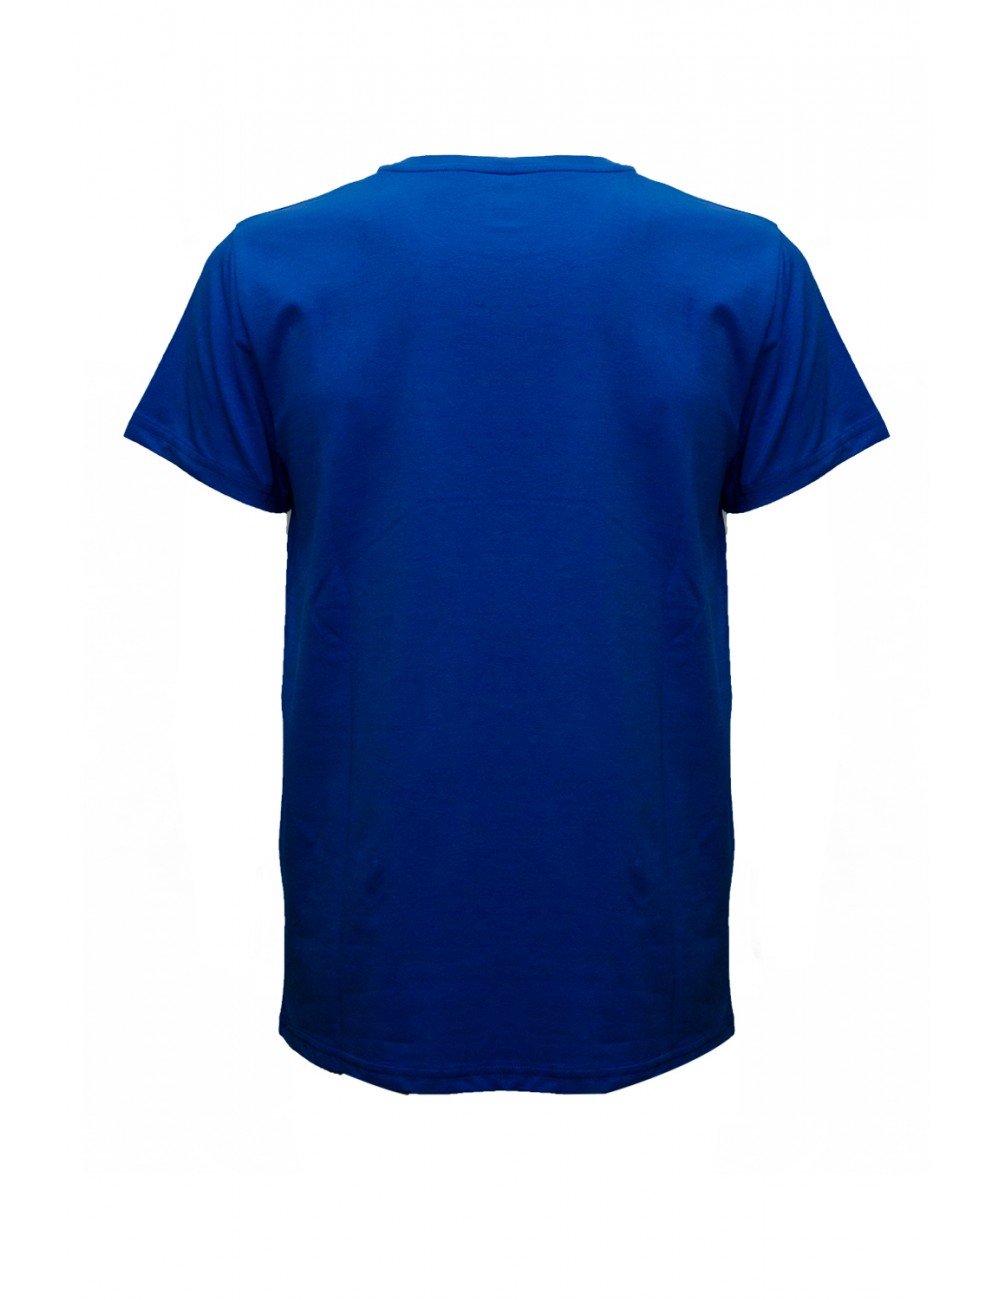 t-shirt moschino UOMO BLU 0318 - V3A0703 - 9408 vista frontale